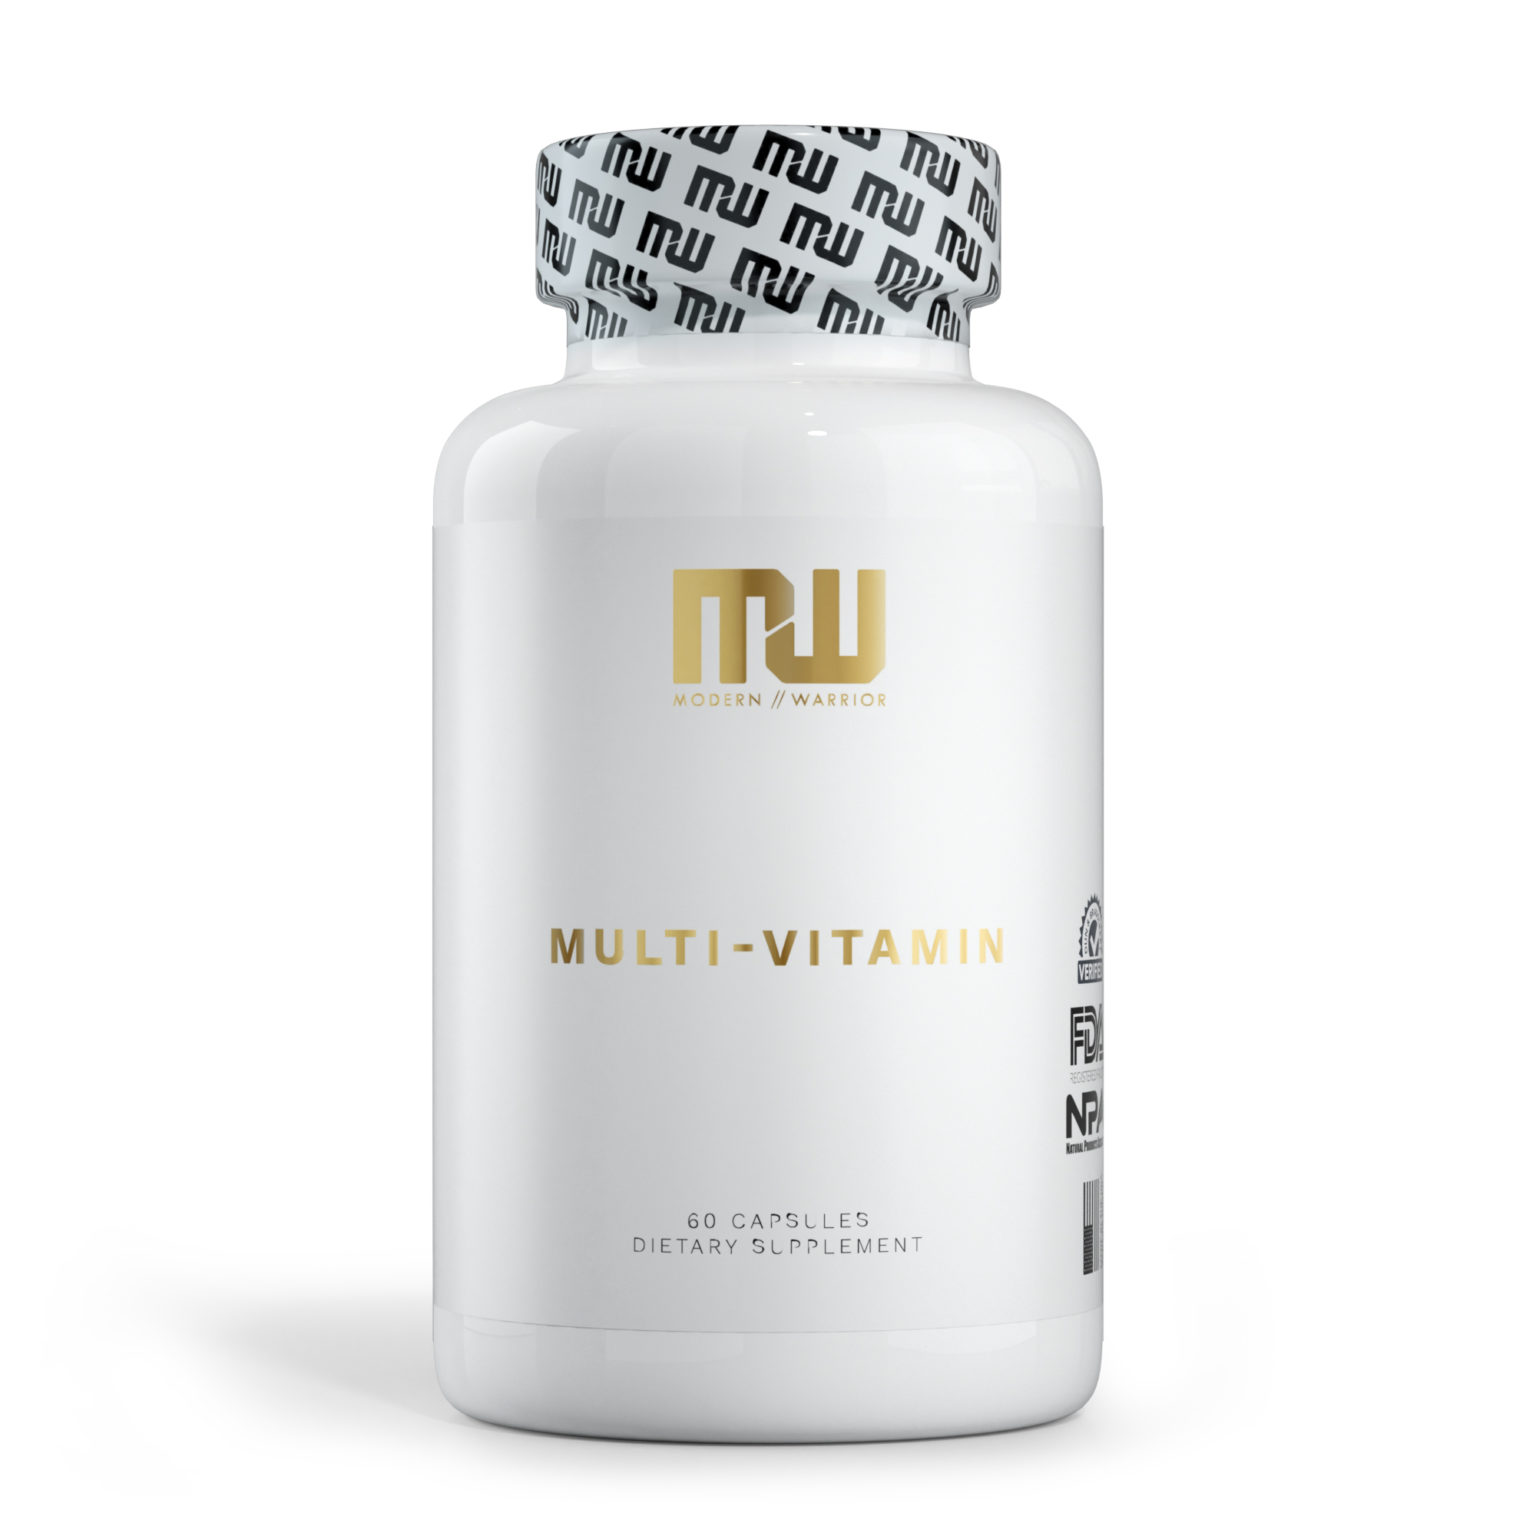 Multi-vitamin